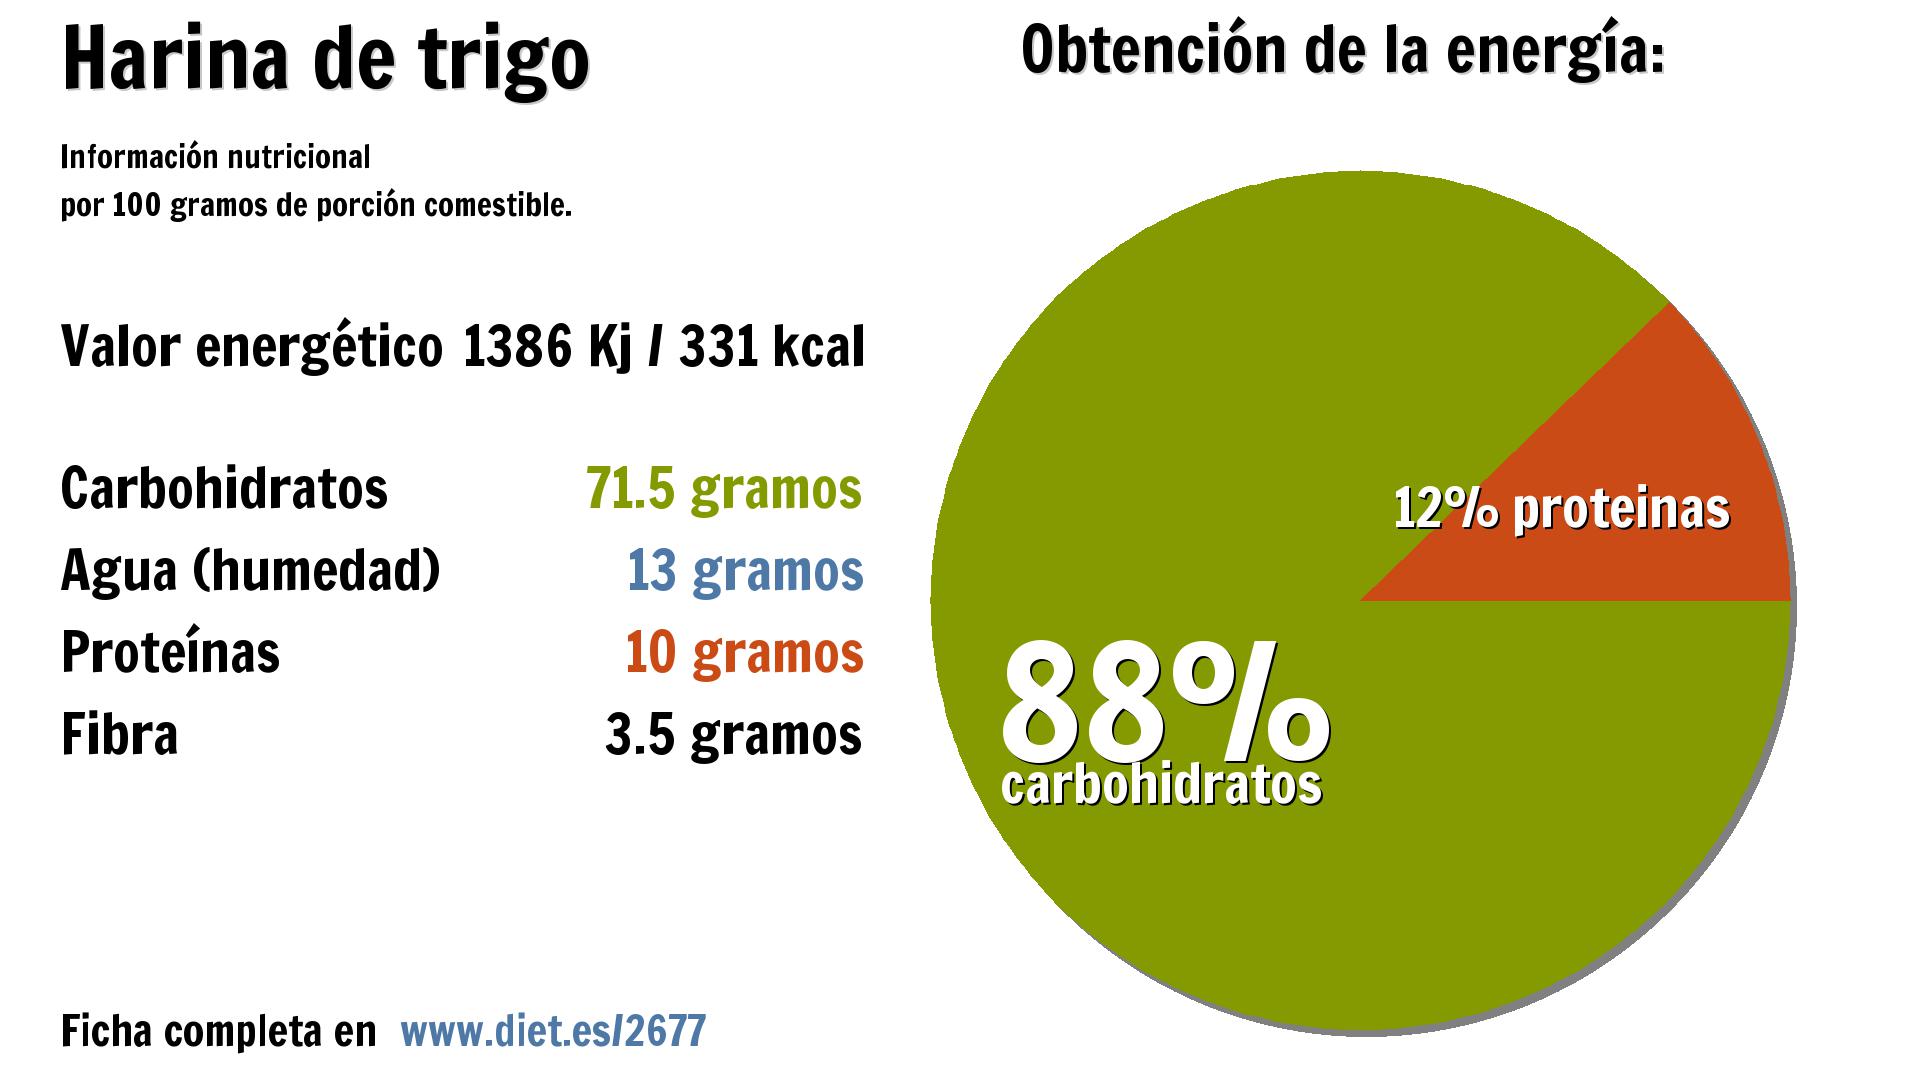 Harina de trigo: energía 1386 Kj, carbohidratos 72 g., agua 13 g., proteínas 10 g. y fibra 4 g.